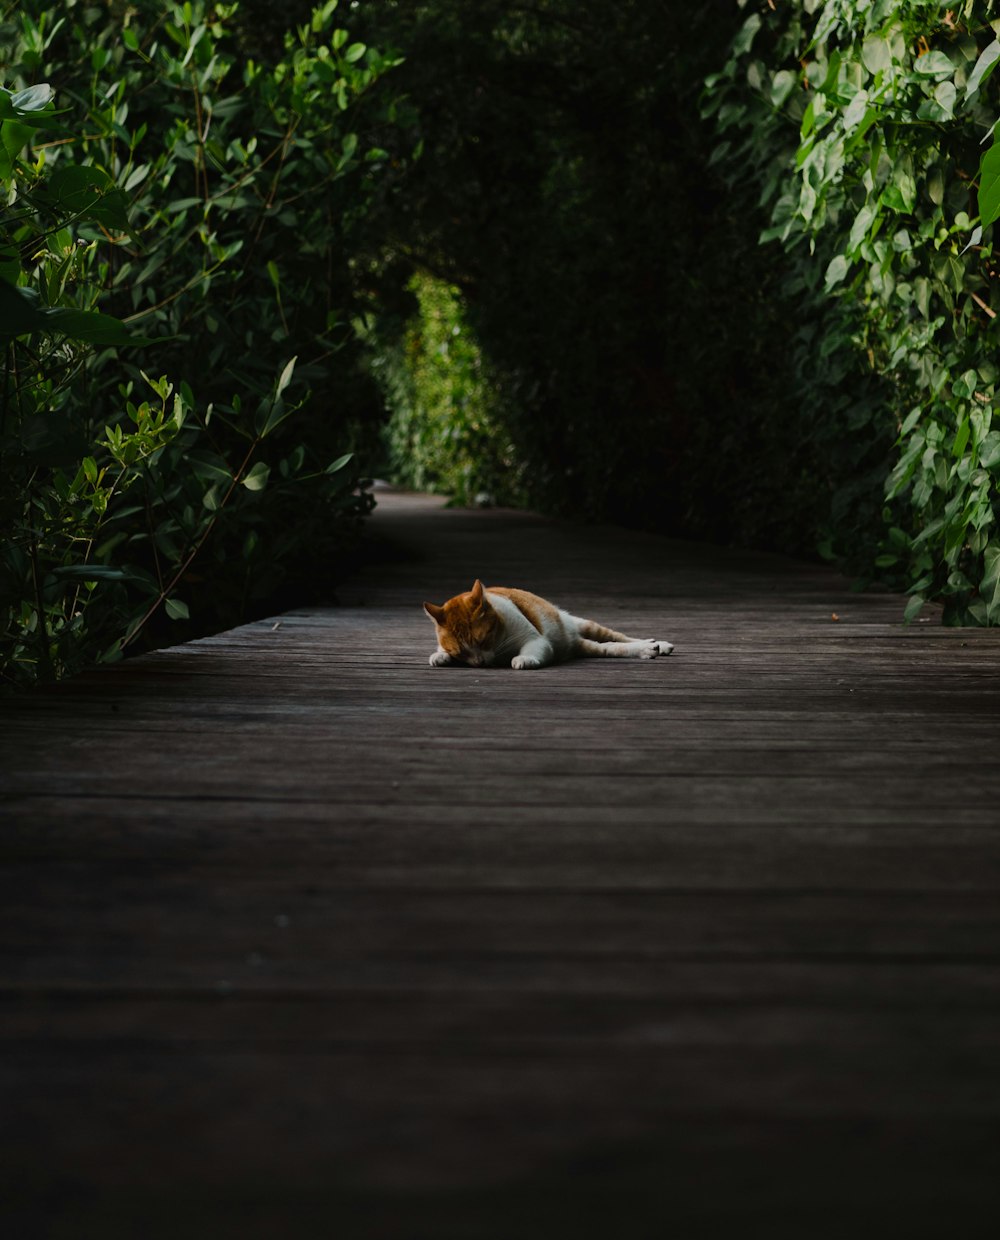 a cat lying on a wood deck